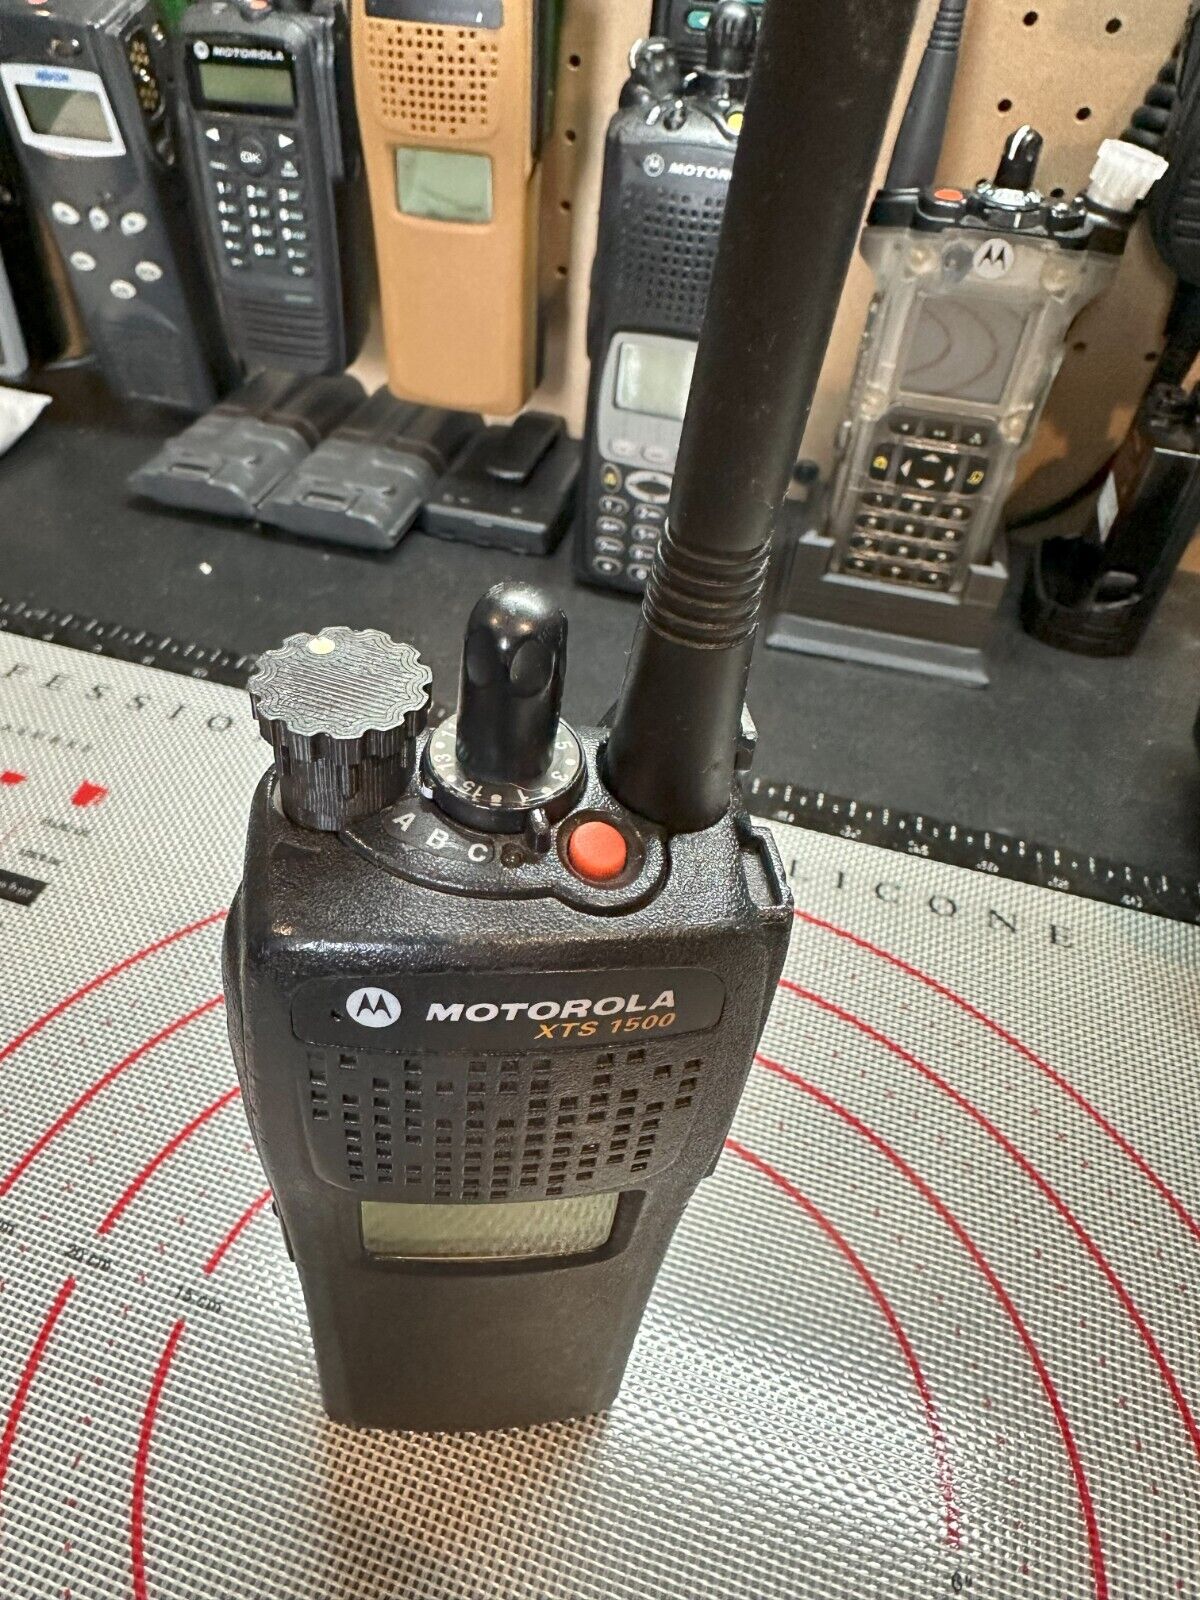 Fire Department style knob for Motorola Radios